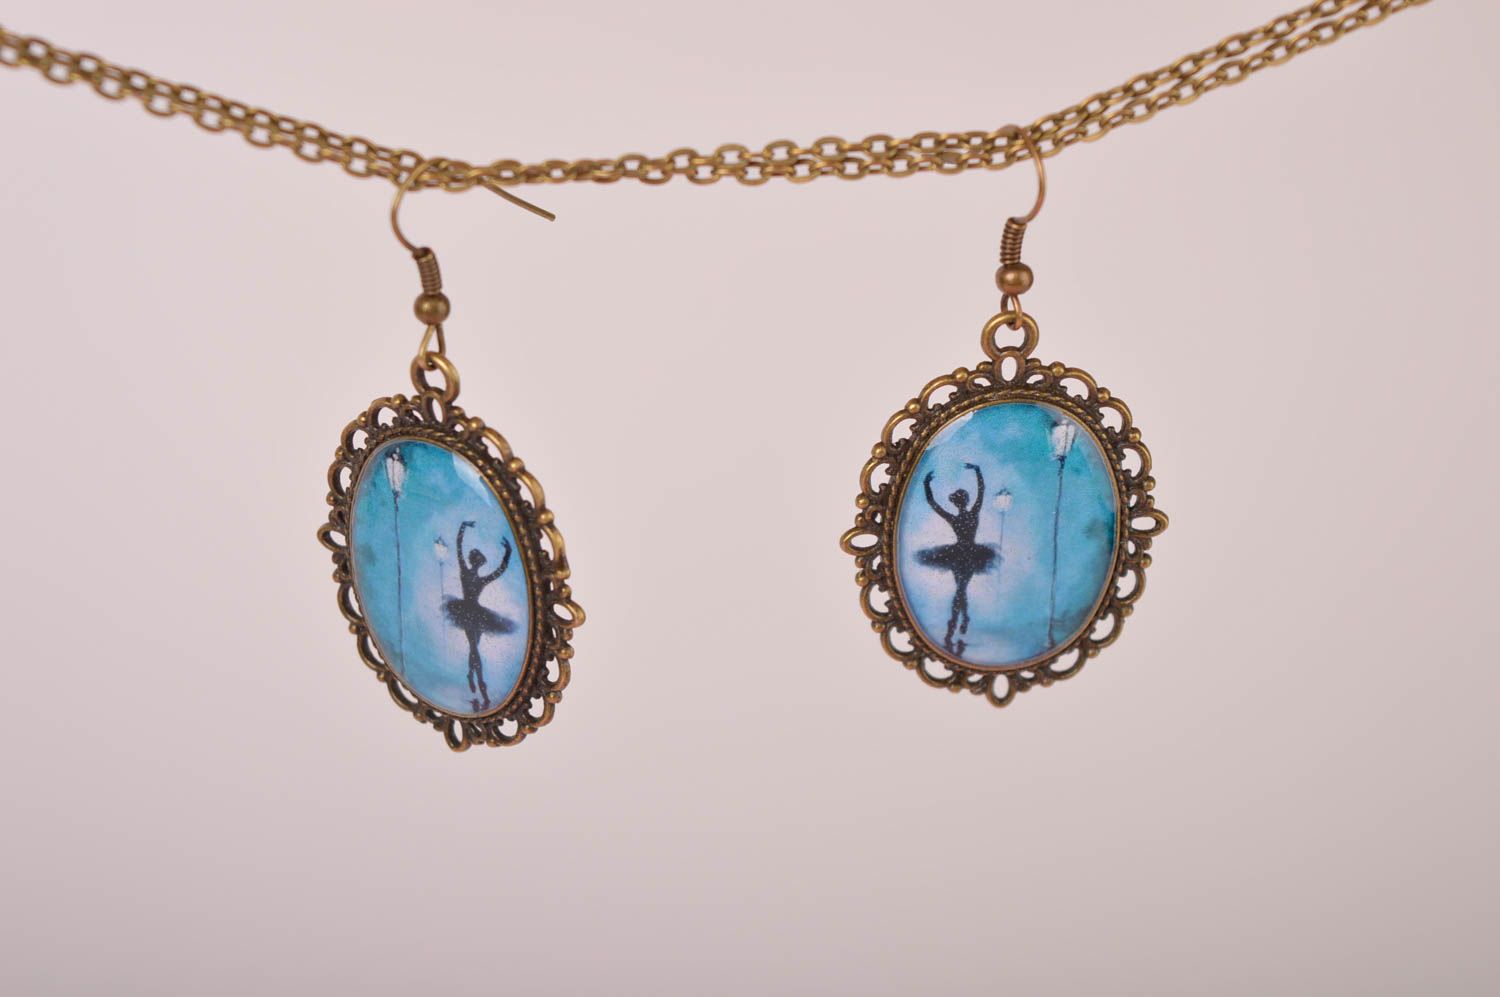 Handmade earrings designer jewelry fashion earrings gifts for girls cool jewelry photo 5